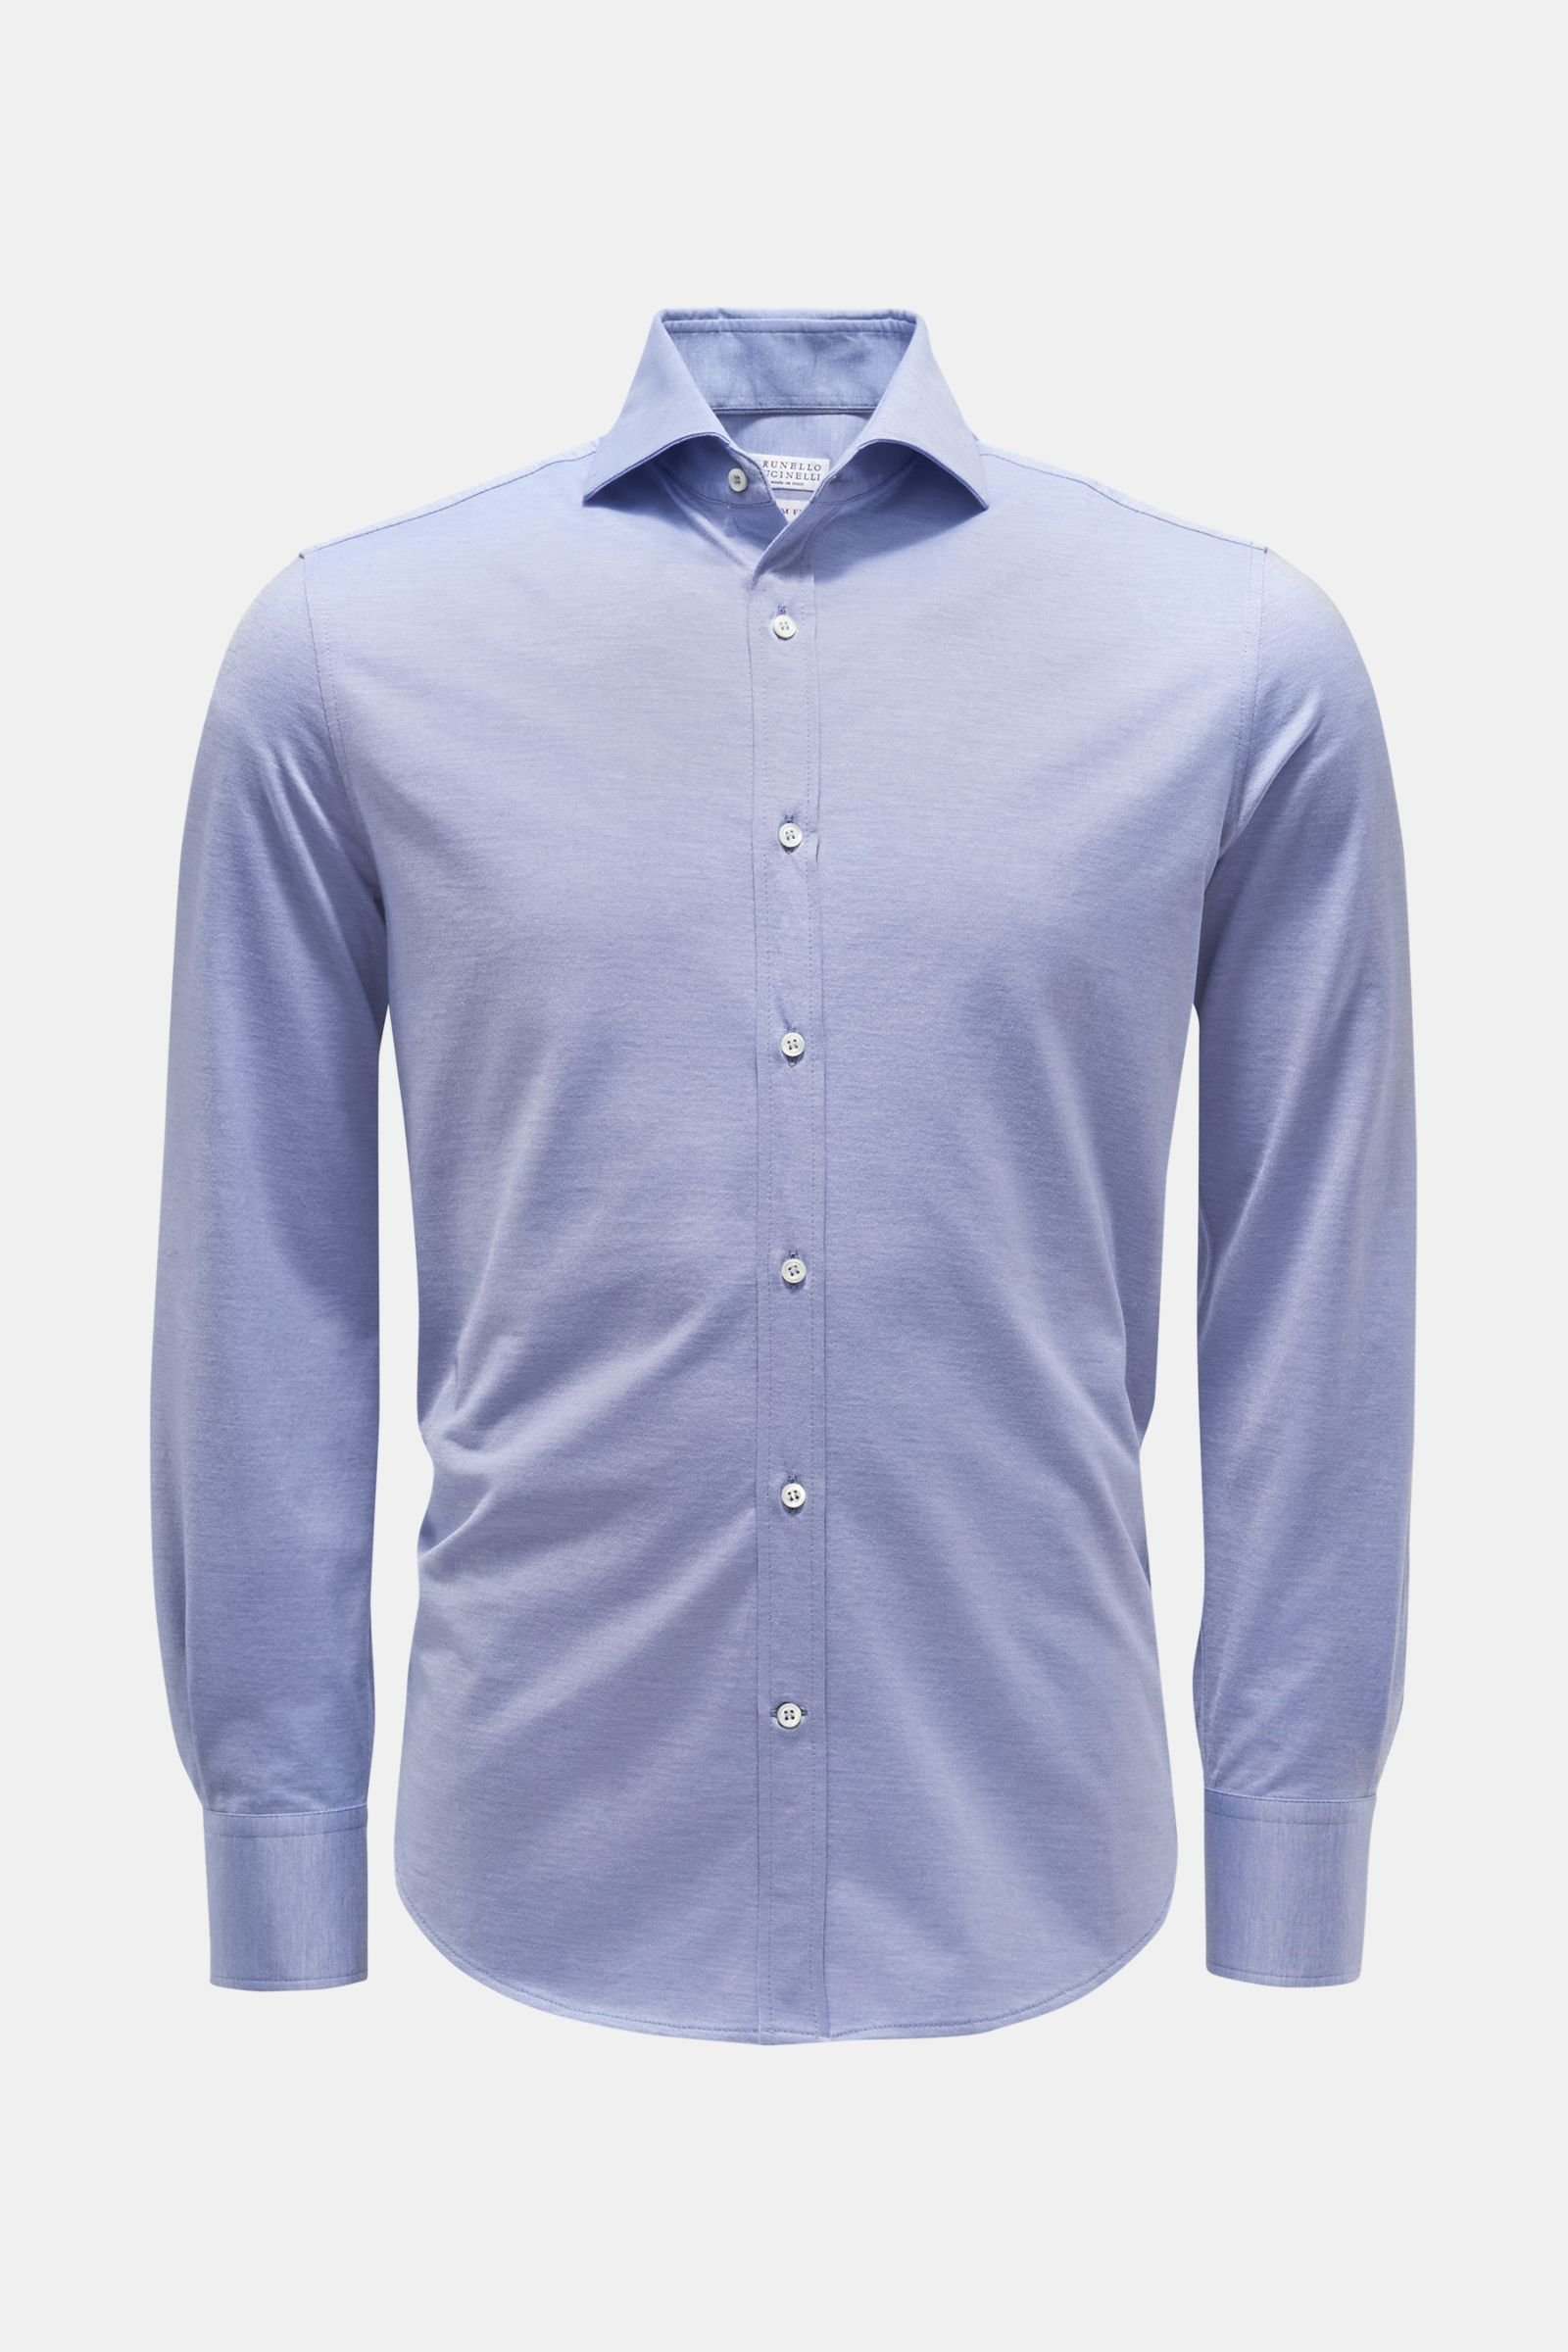 Jersey shirt shark collar smoky blue